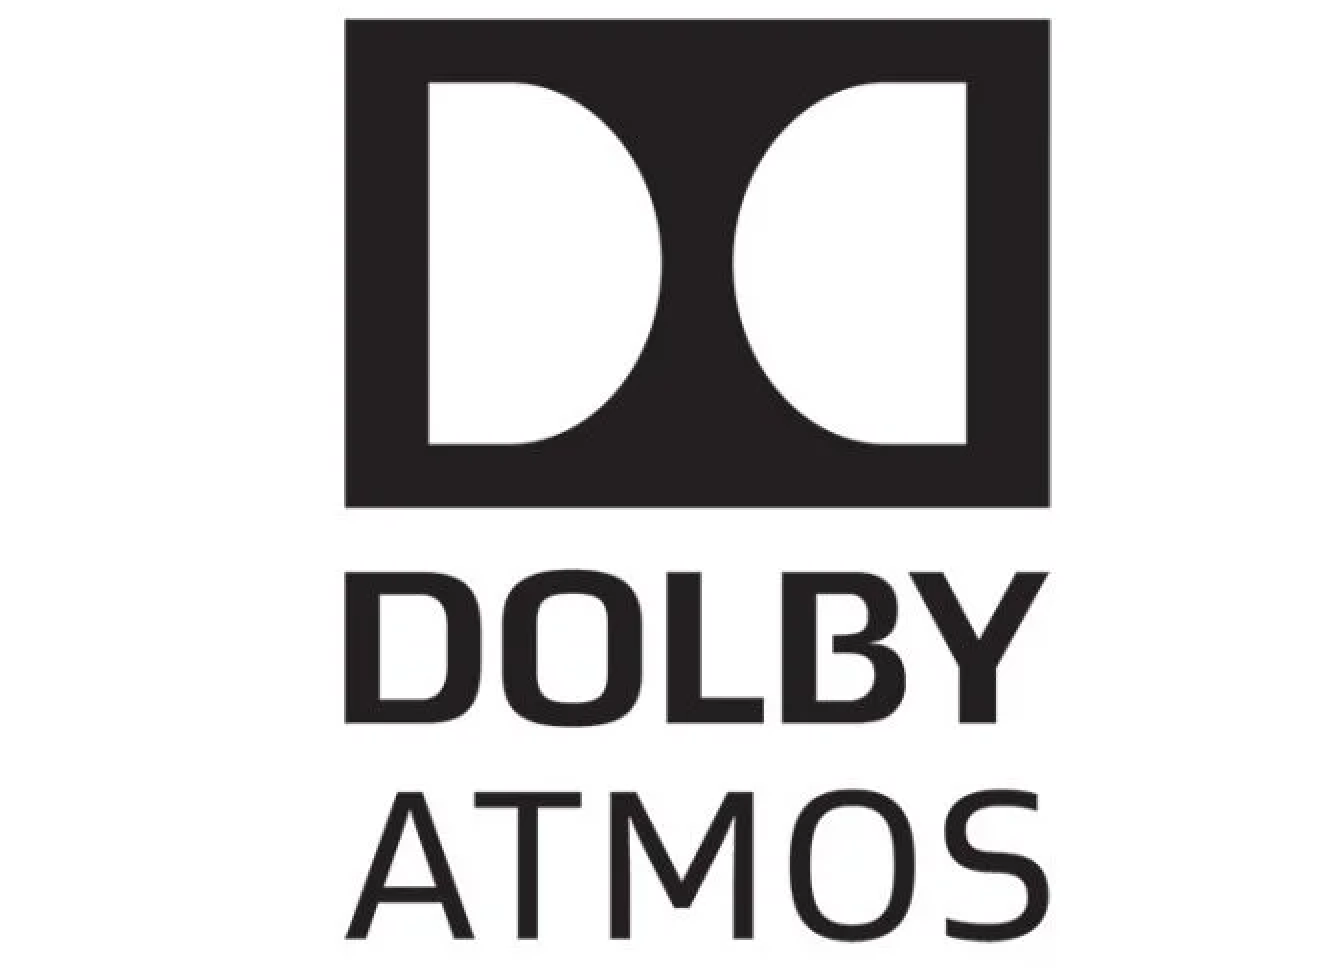 dolby atmos enabled soundbars